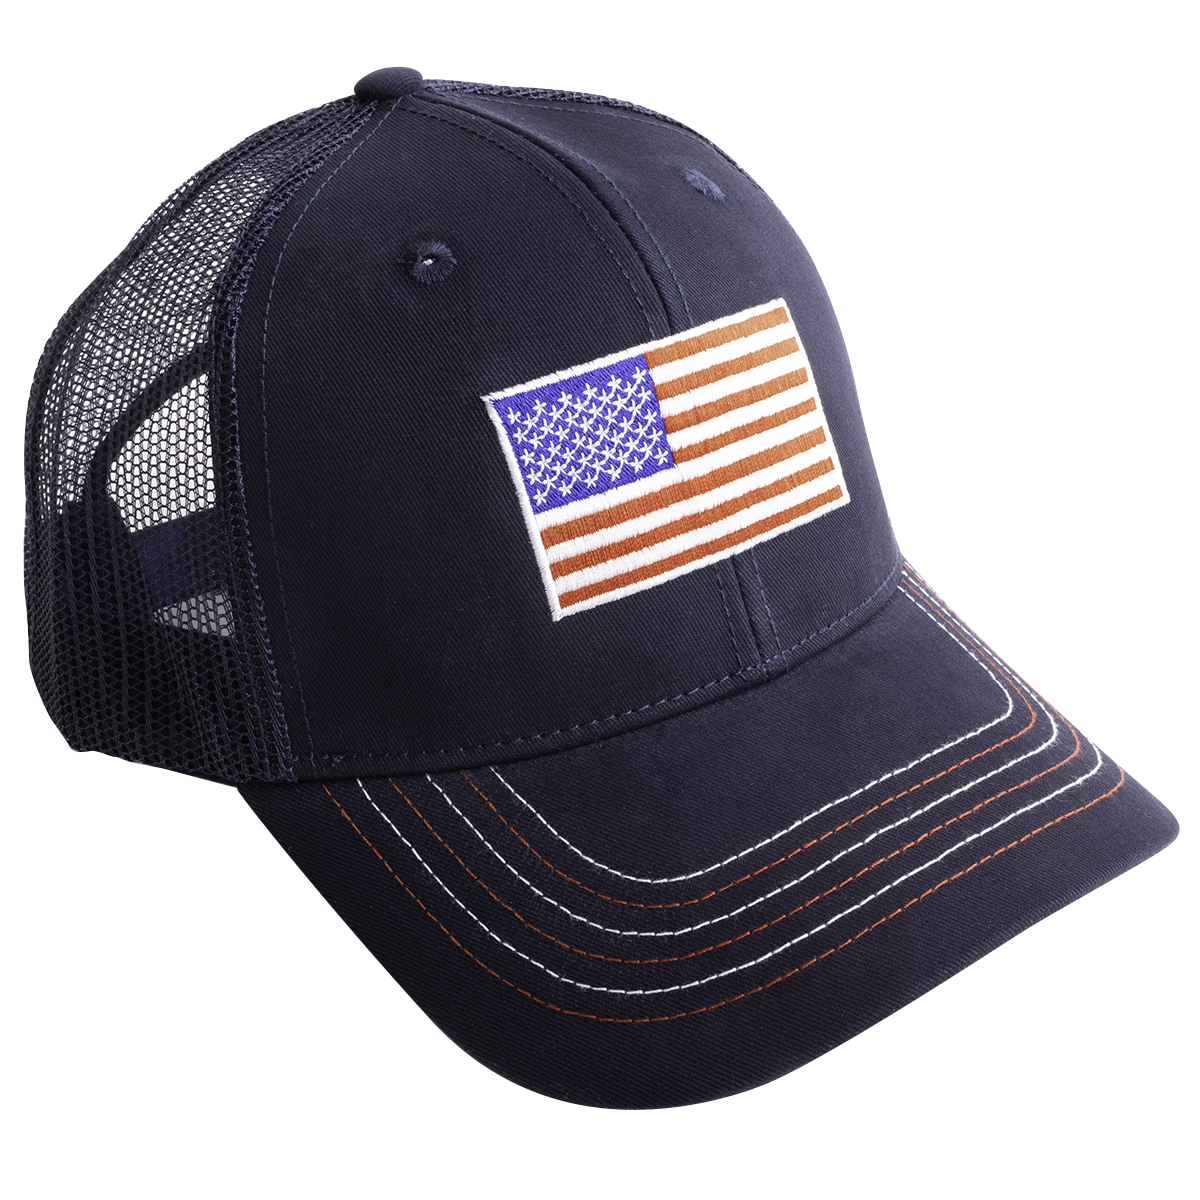 BlackCanyon Outfitters BCOCAPAMFLG American Flag Patch Baseball Cap Patriotic Trucker Hat-Blue